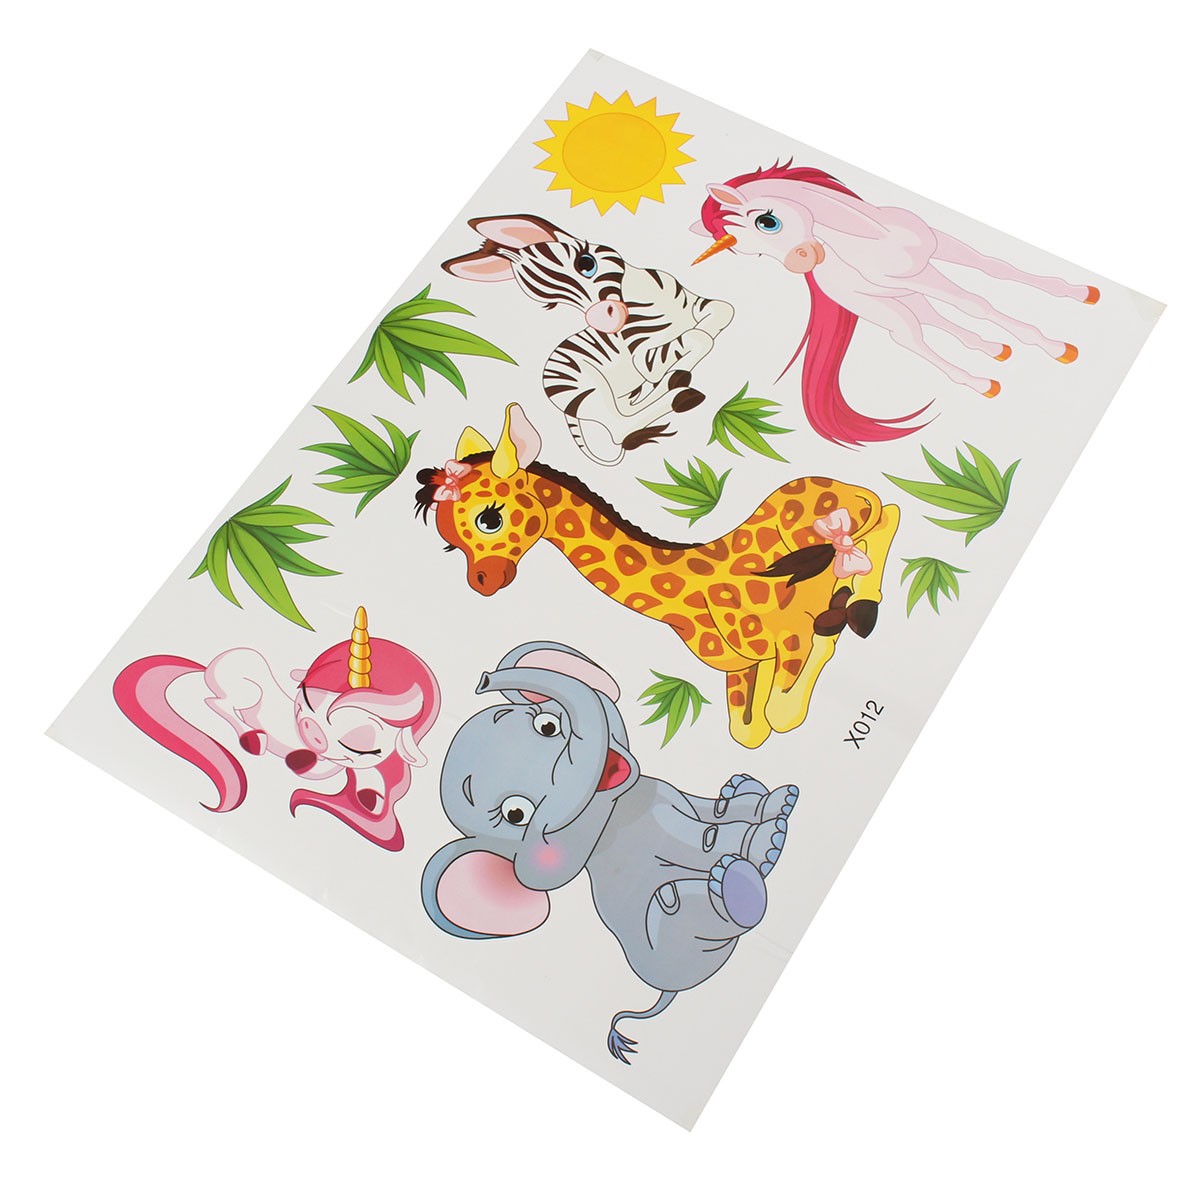 Cartoon-Animal-Elephant-Giraffes-Grass-Bedroom-Removable-Wall-Sticker-Home-Decor-1023584